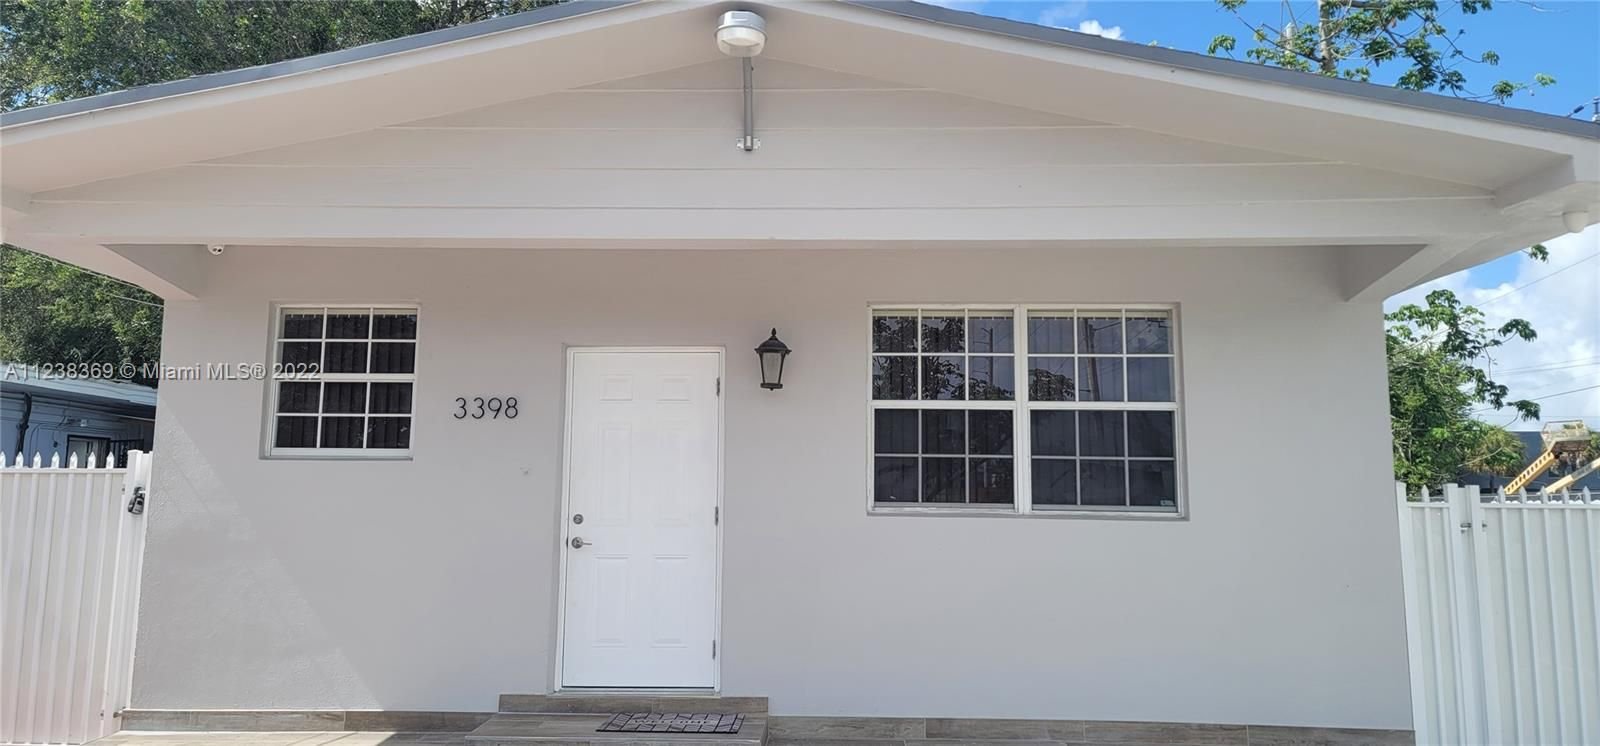 Real estate property located at 3398 50th St, Miami-Dade County, Miami, FL